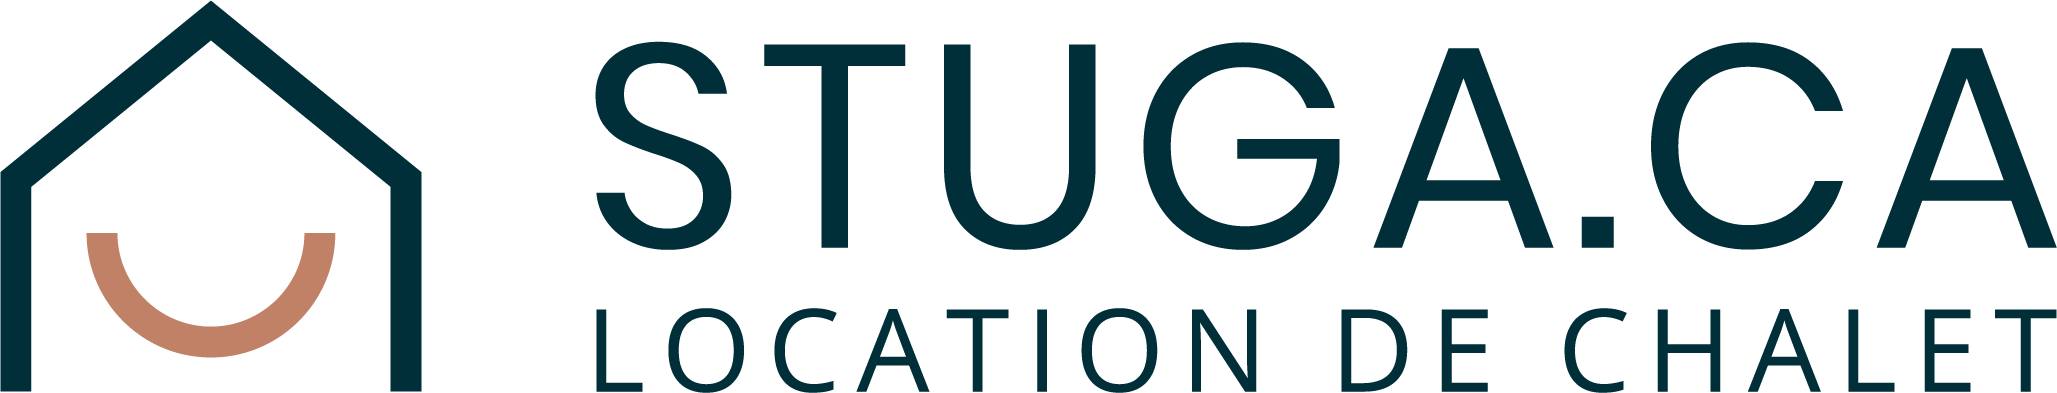 Stuga.ca - Chalet locatif logo couleur